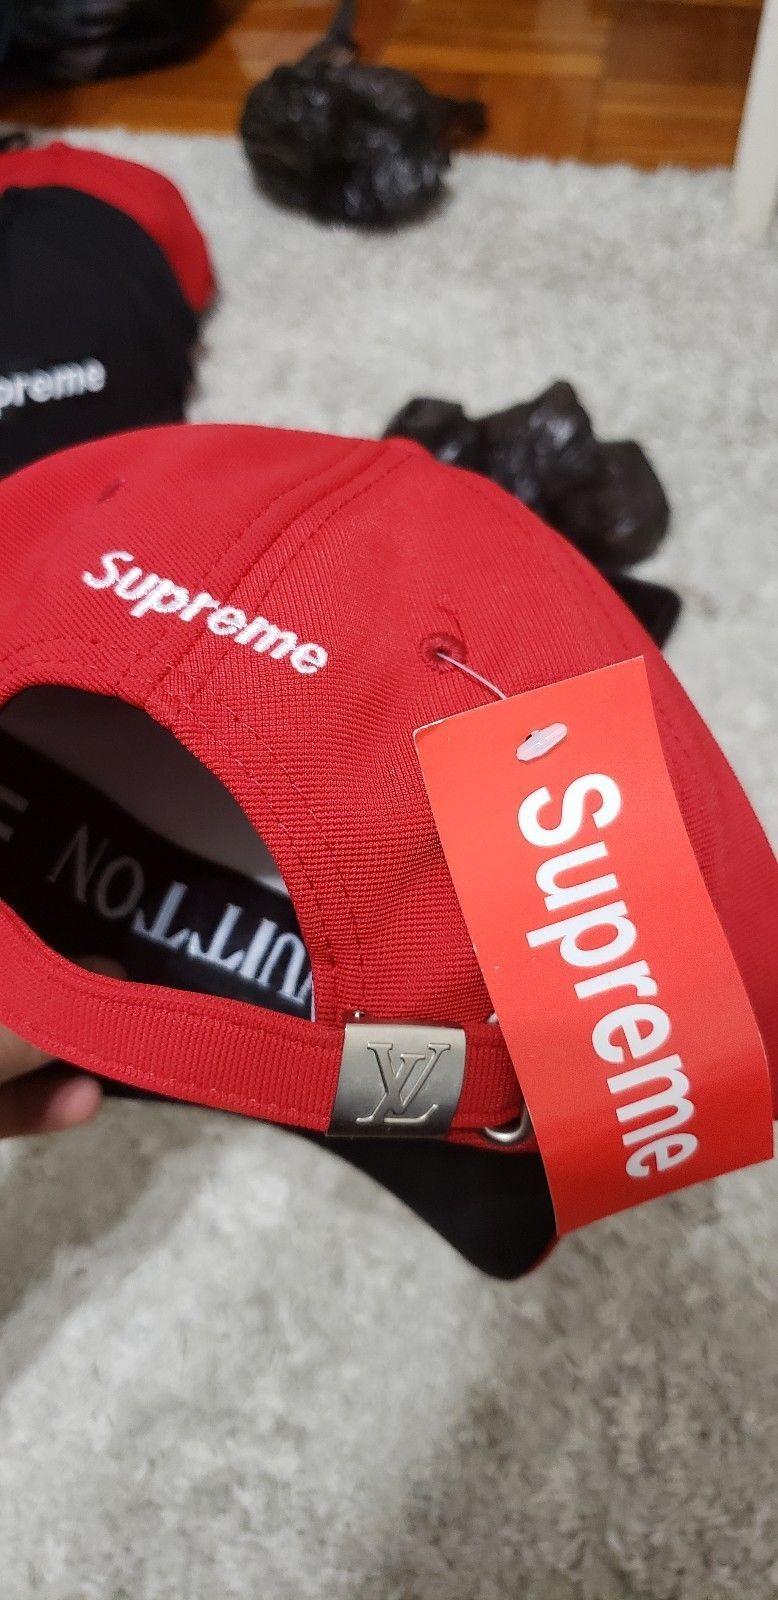 BAPE Supreme Red Logo - Details about SUPREME Logo BOX Pattern Warm Winter Cuffed Beanie Hat ...